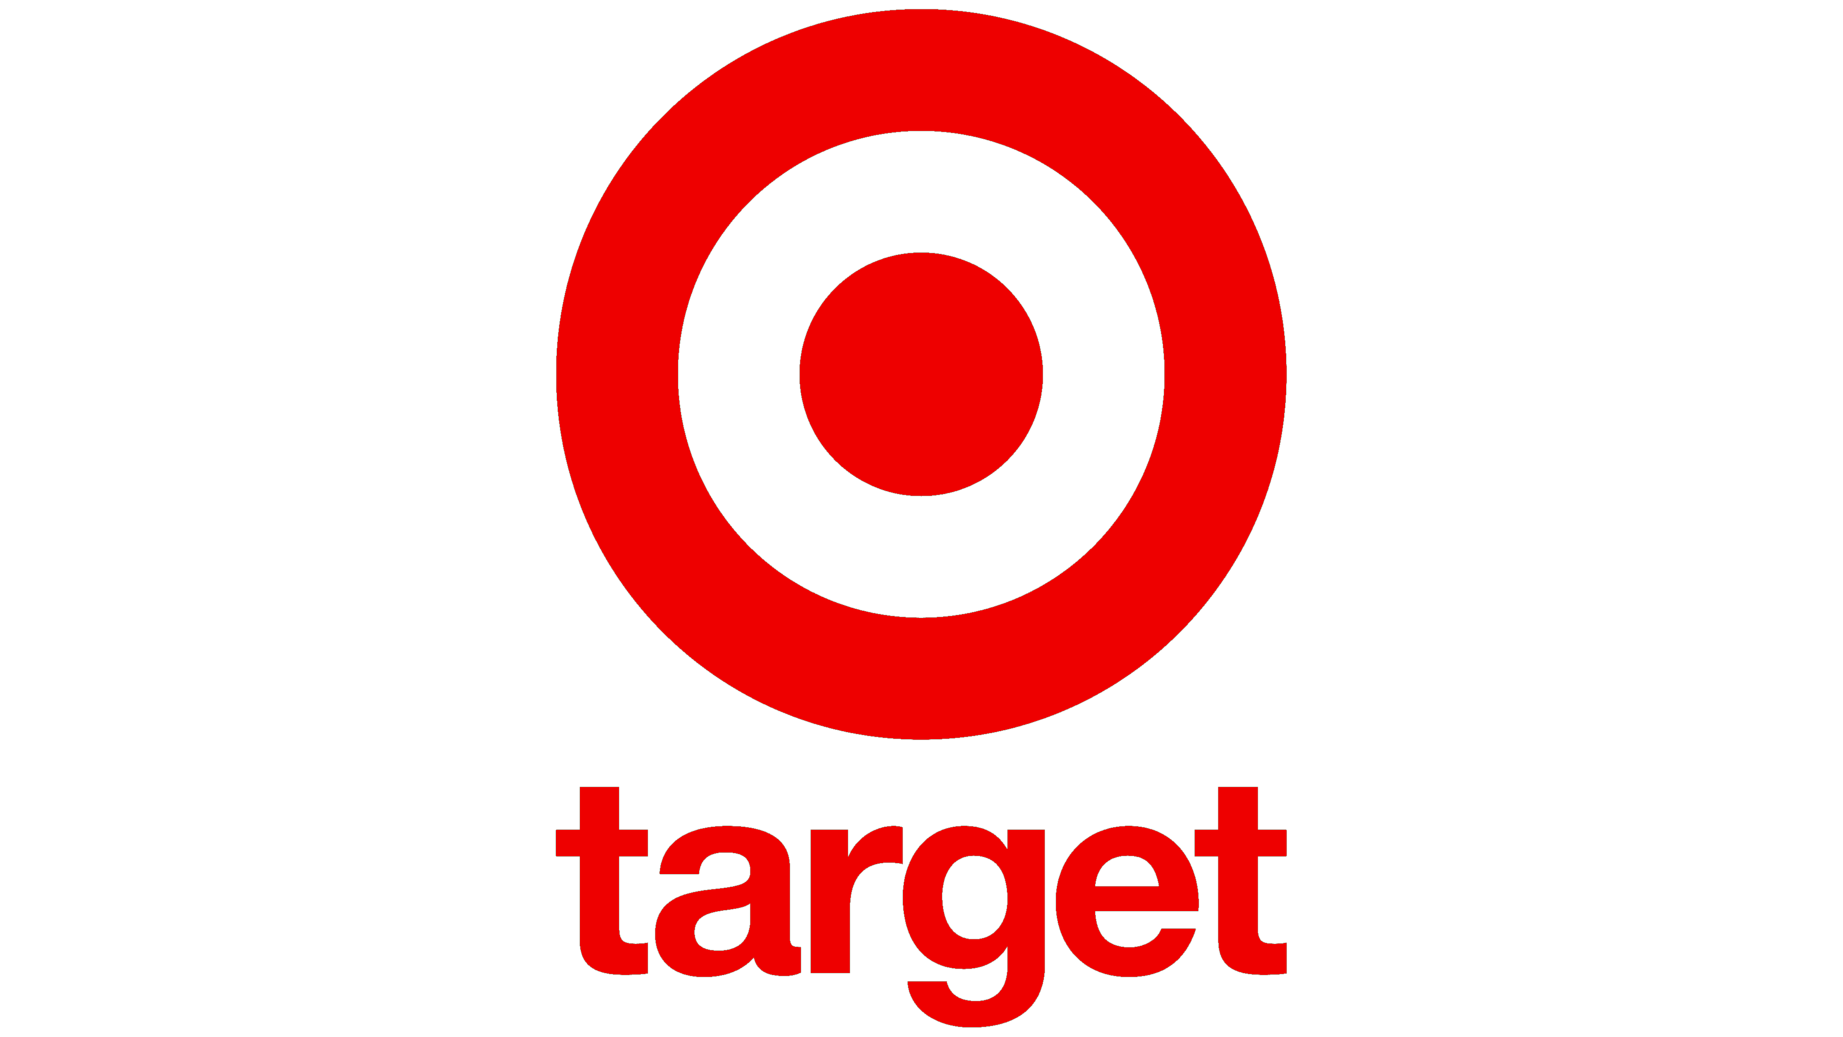 Target sign